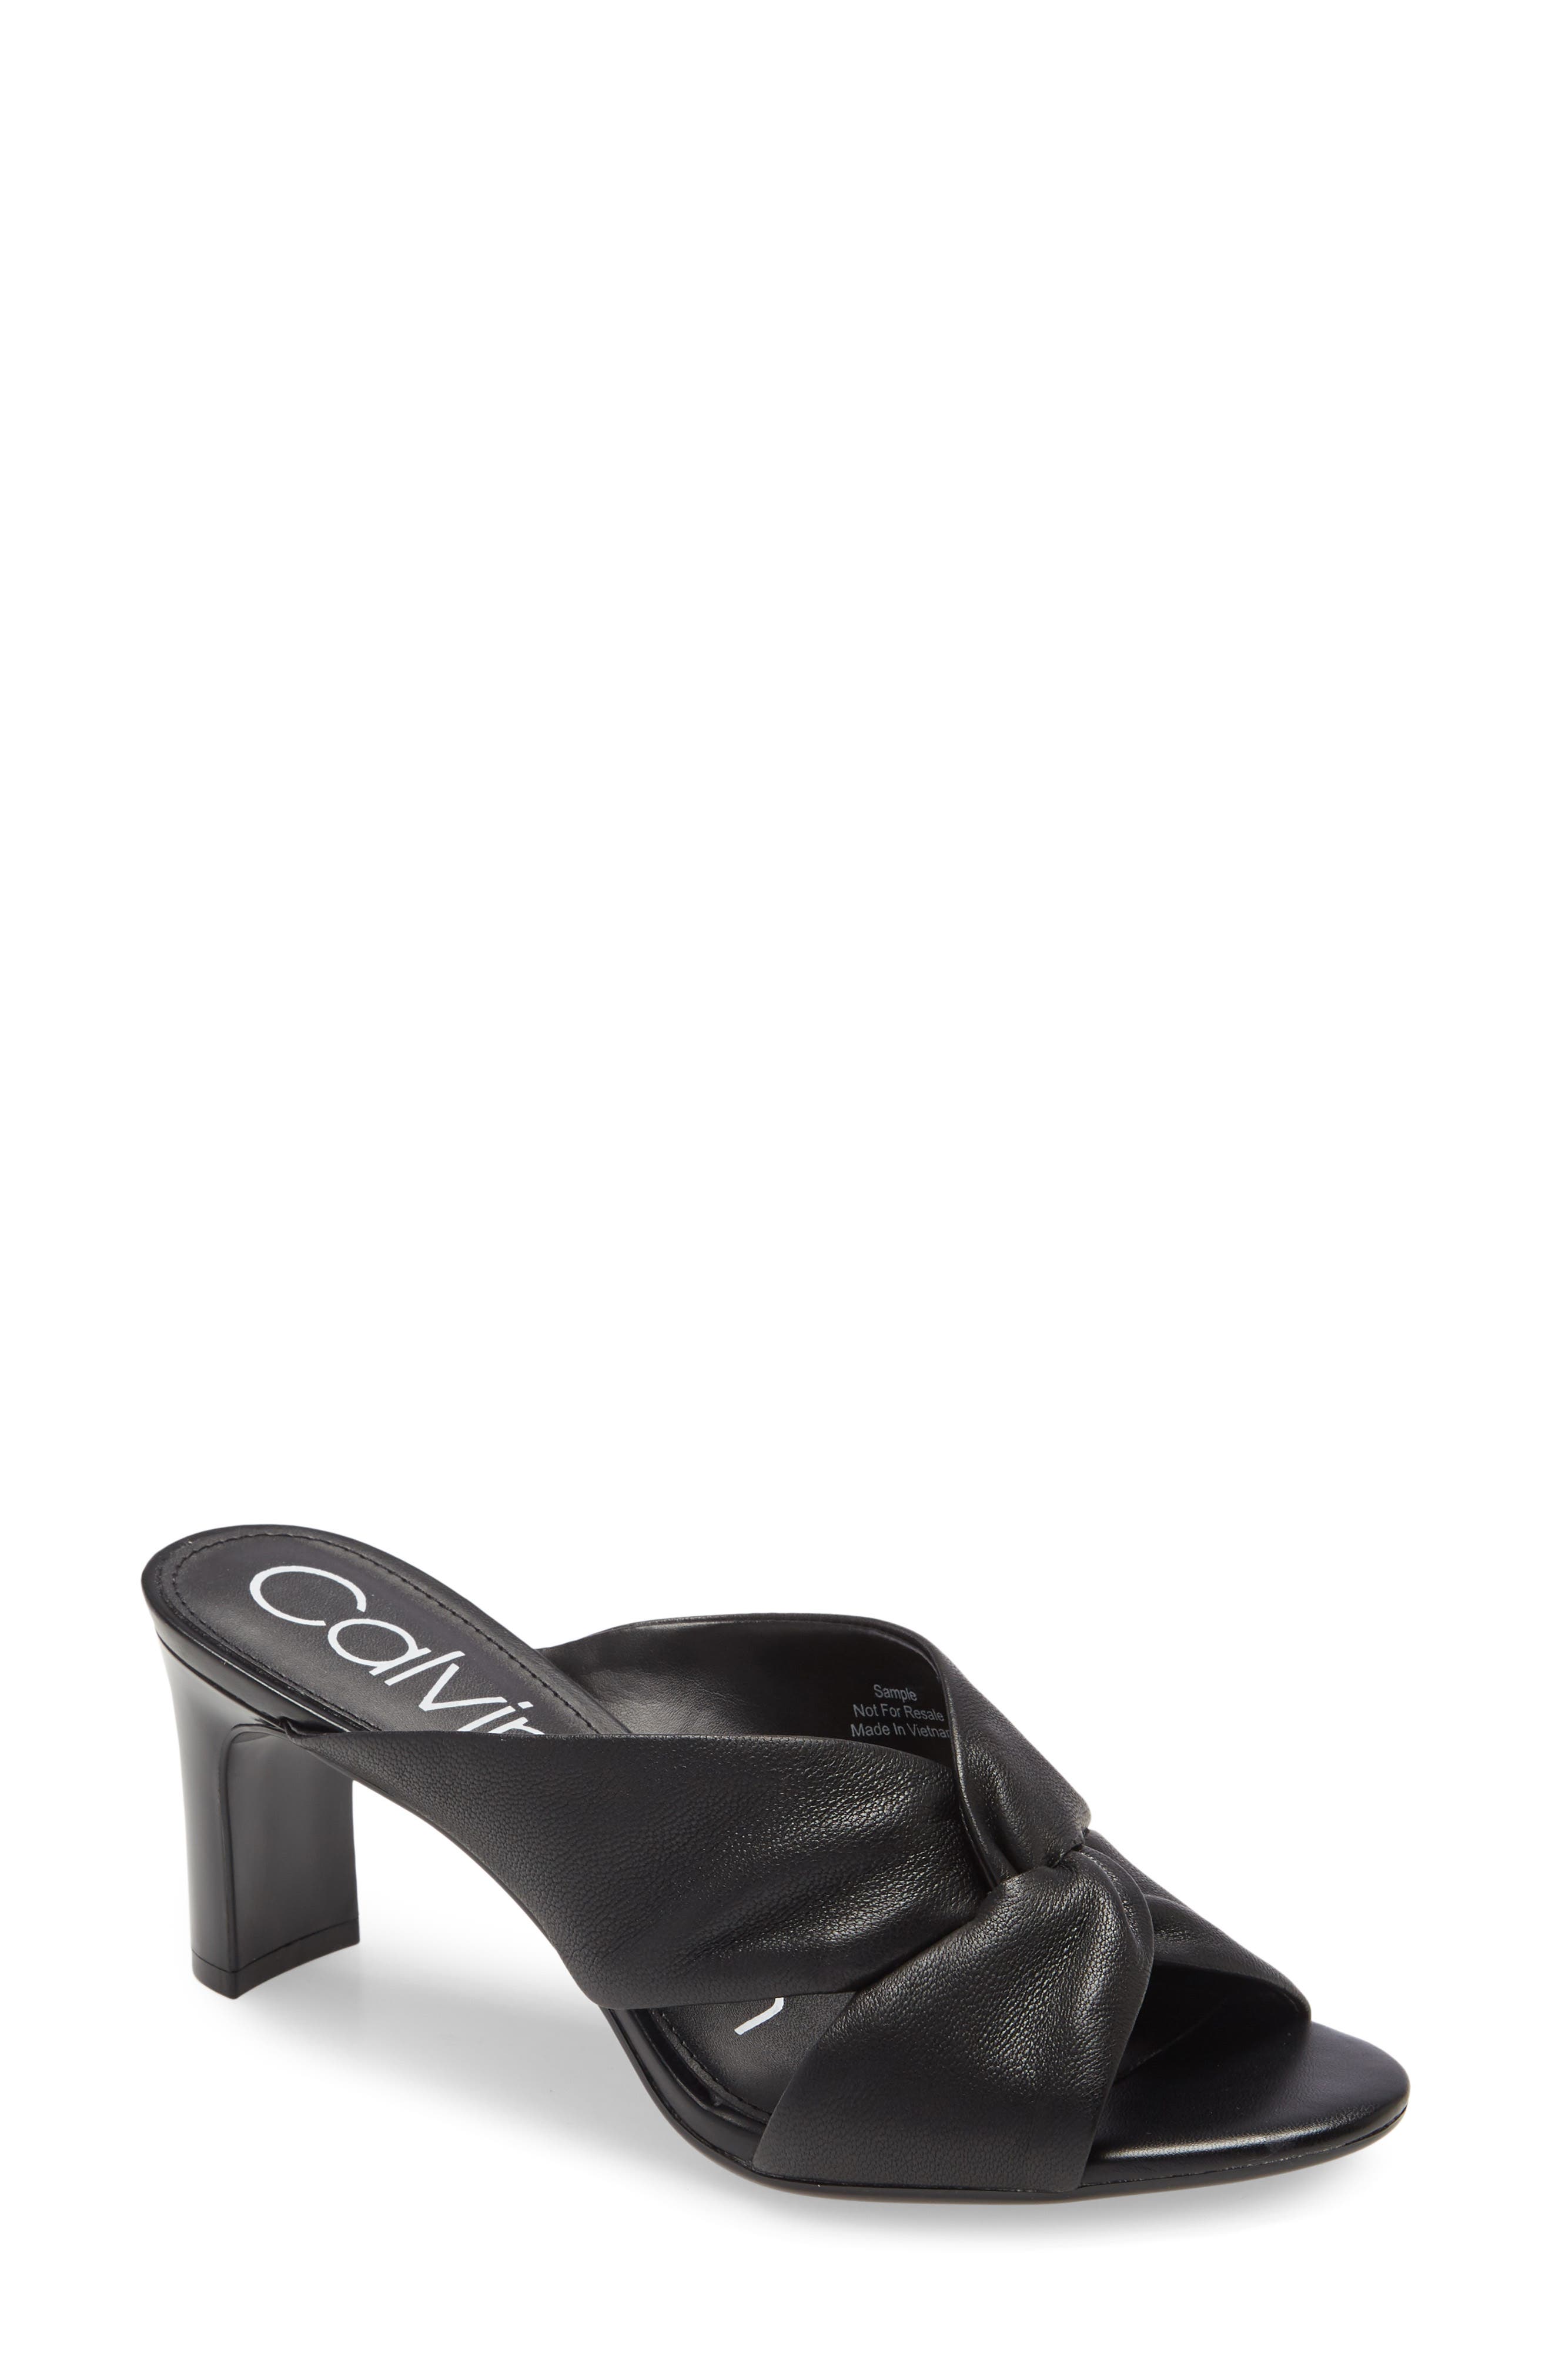 UPC 194060410586 product image for Women's Calvin Klein Omarion Sandal, Size 9 M - Black | upcitemdb.com